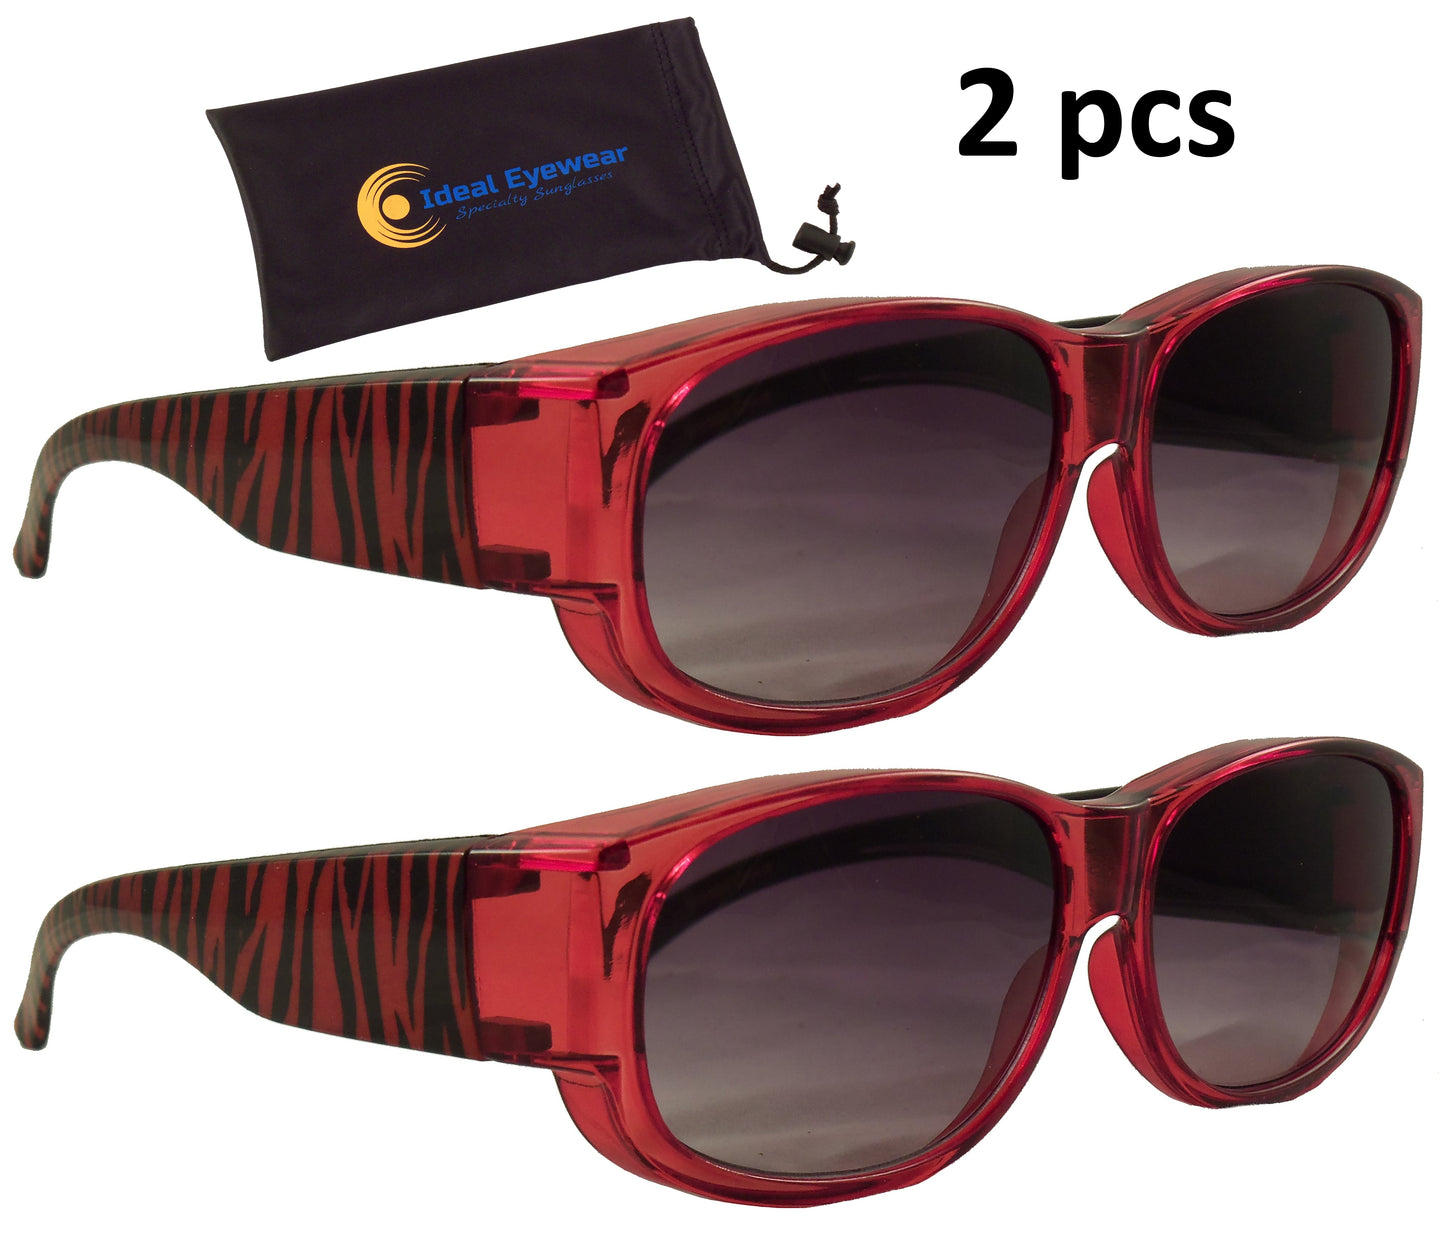 Animal Print Fit Over Sunglasses - Zebra, Tiger - Wear Over Glasses